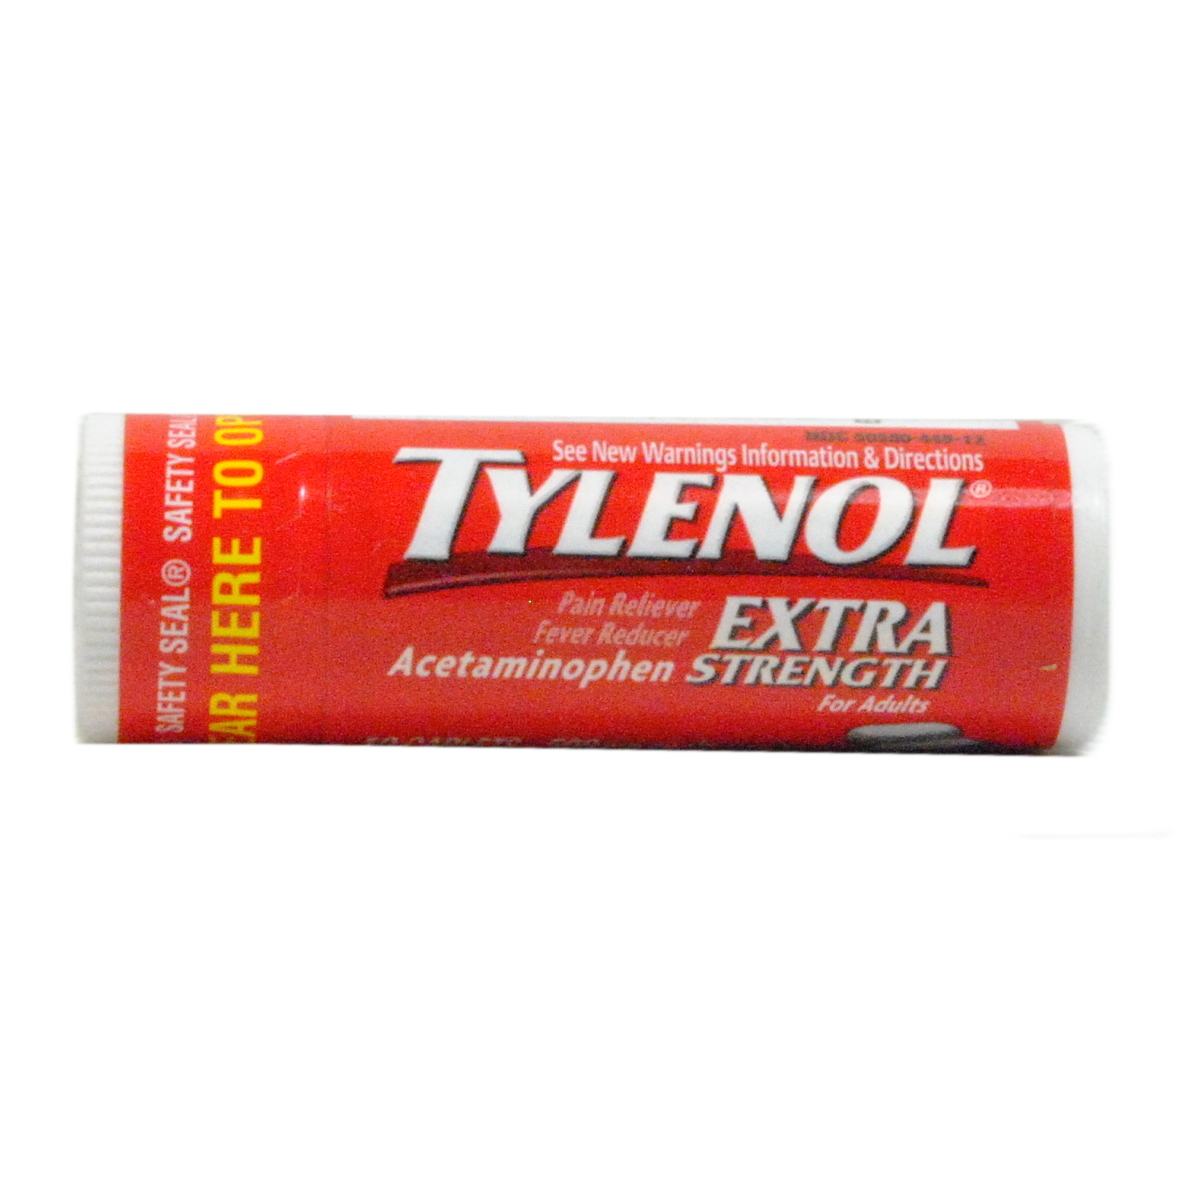 Wholesale Tylenol Extra Strength 10 count vial (SKU